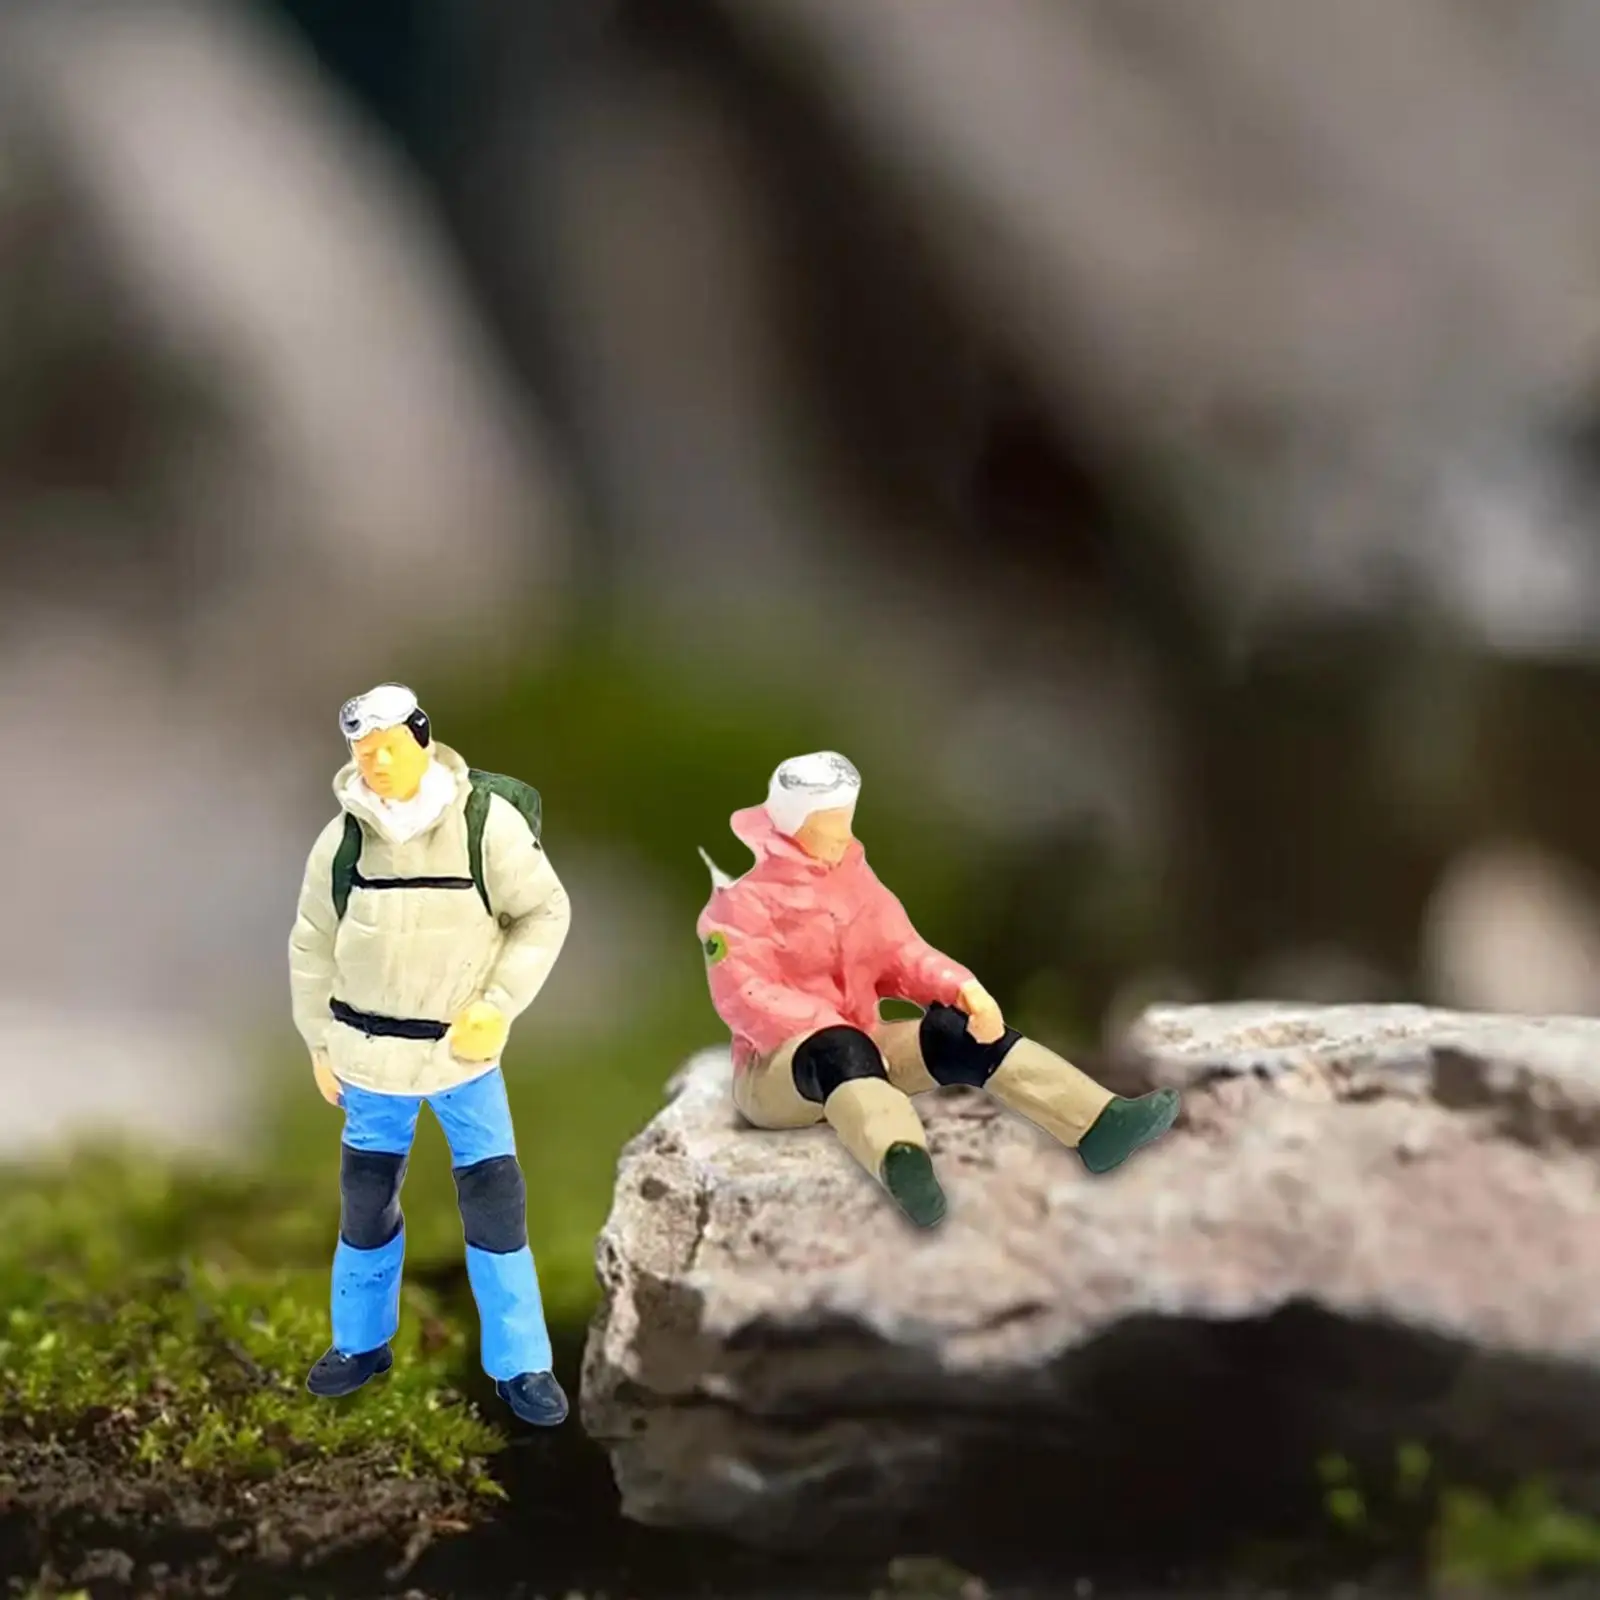 2x 1/87 Miniature Scene People Role Play Figure Dollhouse People for DIY Scene DIY Projects